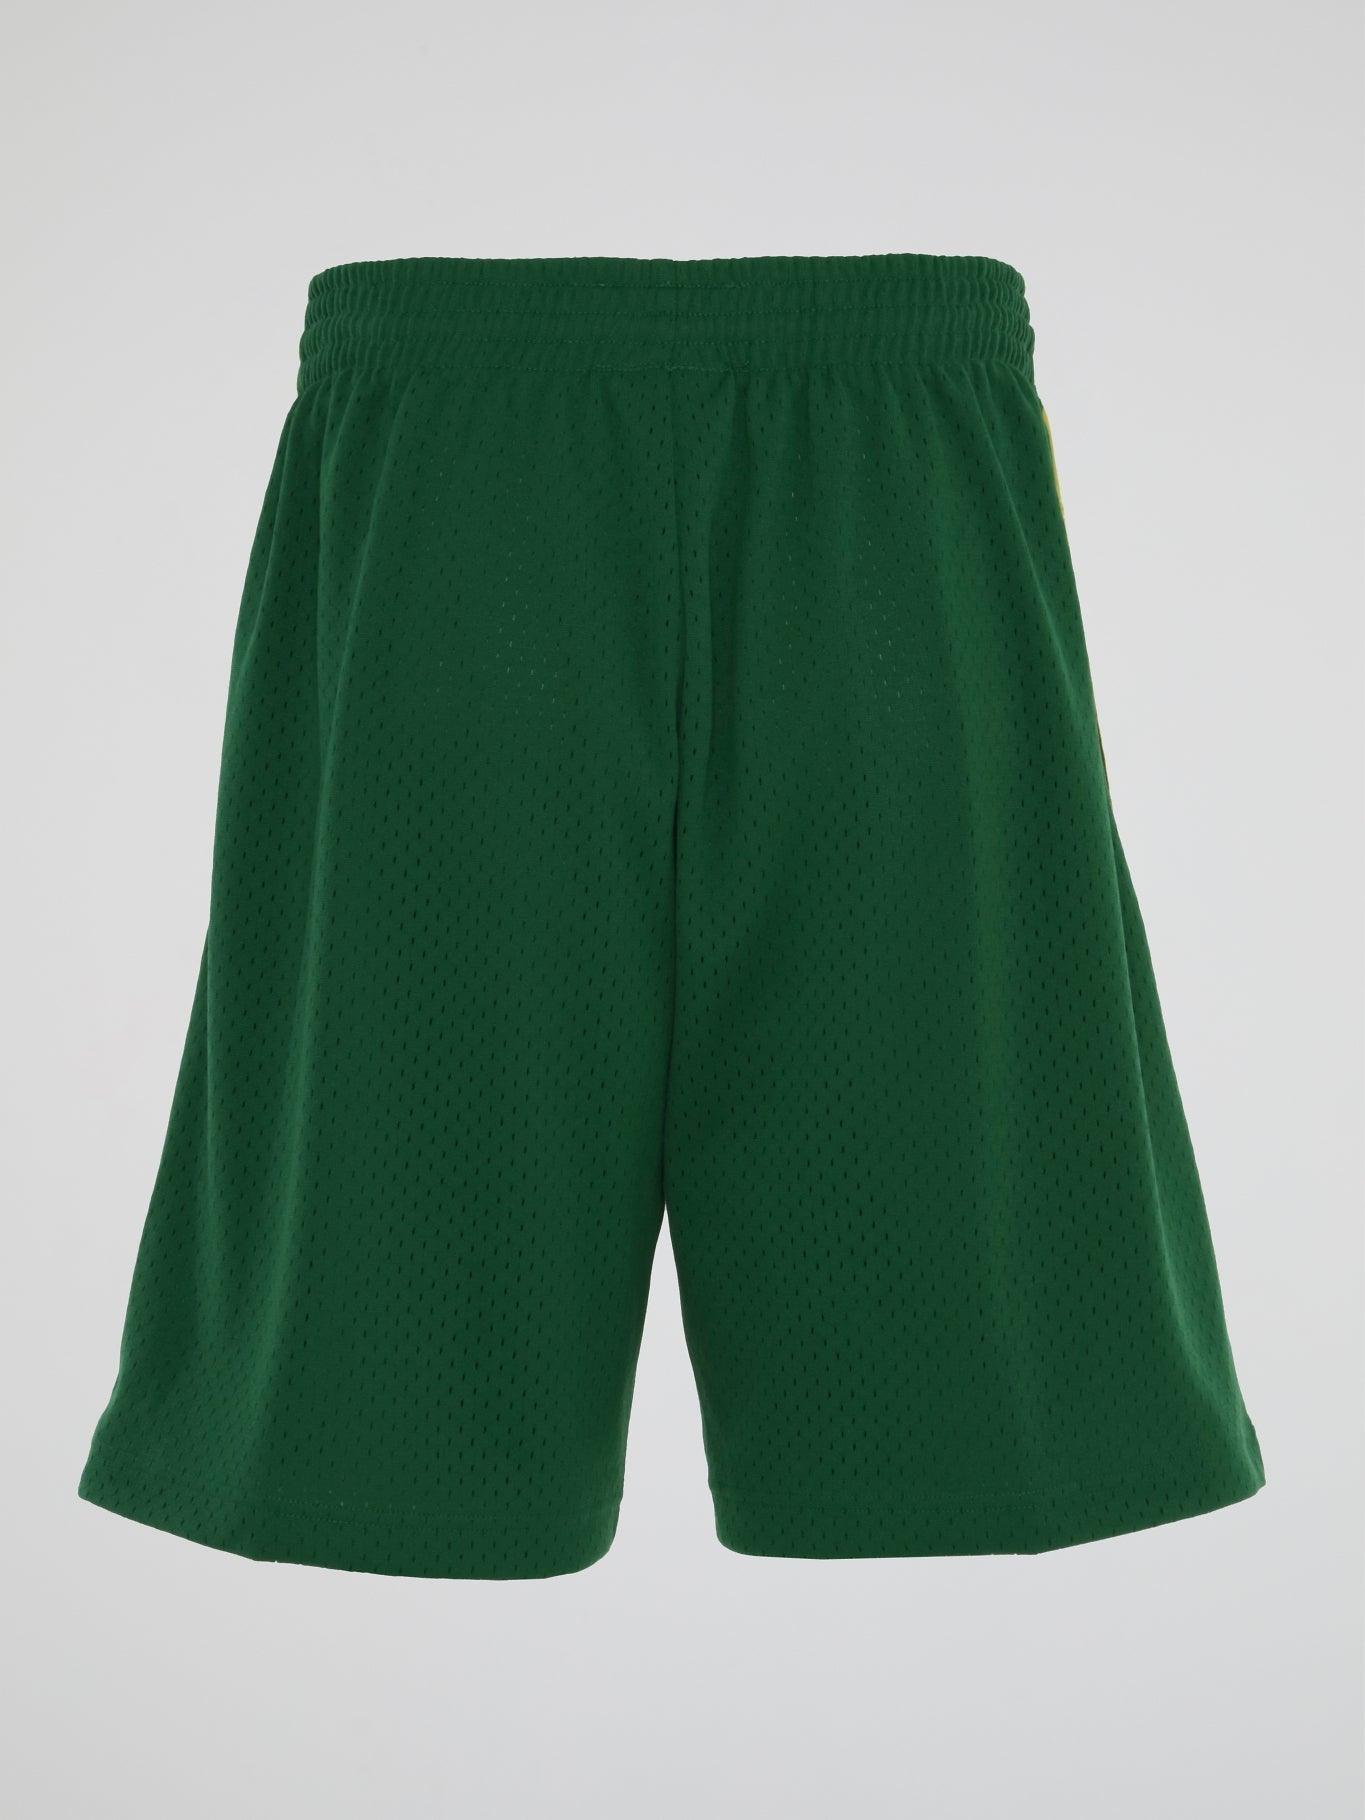 Mitchell & Ness Men's Seattle SuperSonics Swingman Shorts Green XL